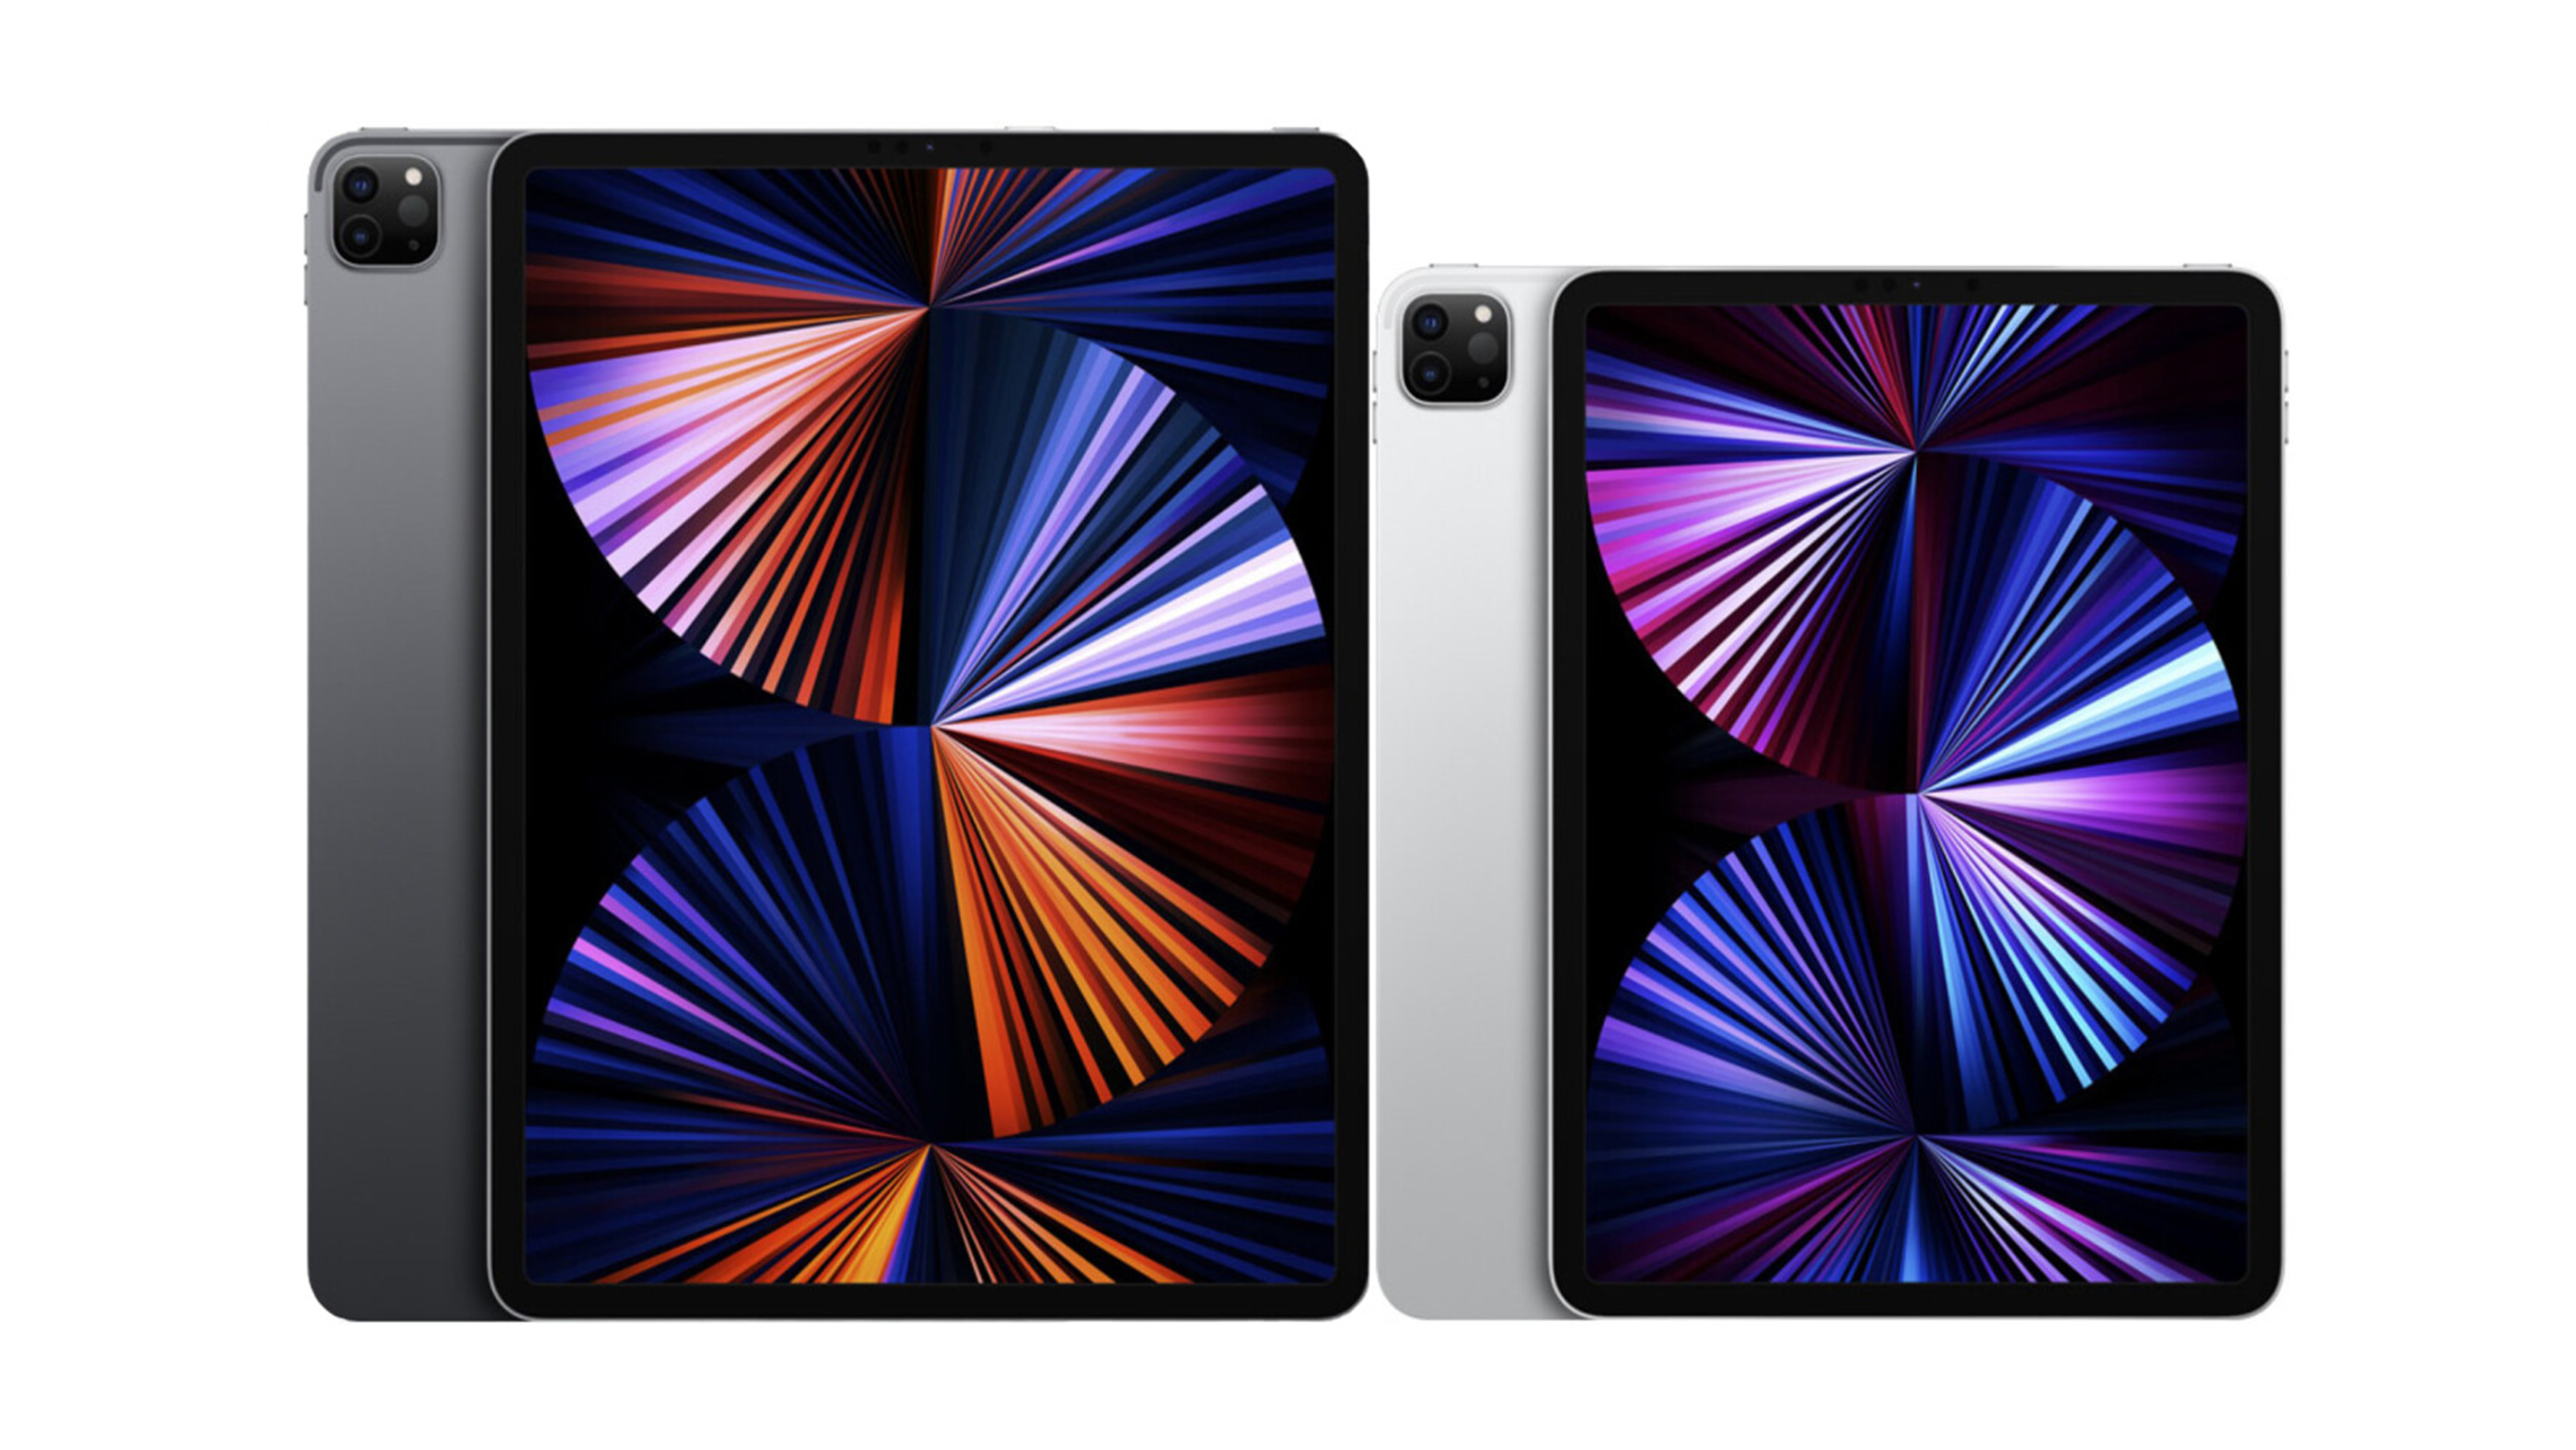 M1 iPad Pro 12.9 inch vs MI iPad Pro 11 inch - Which M1 iPad 2021